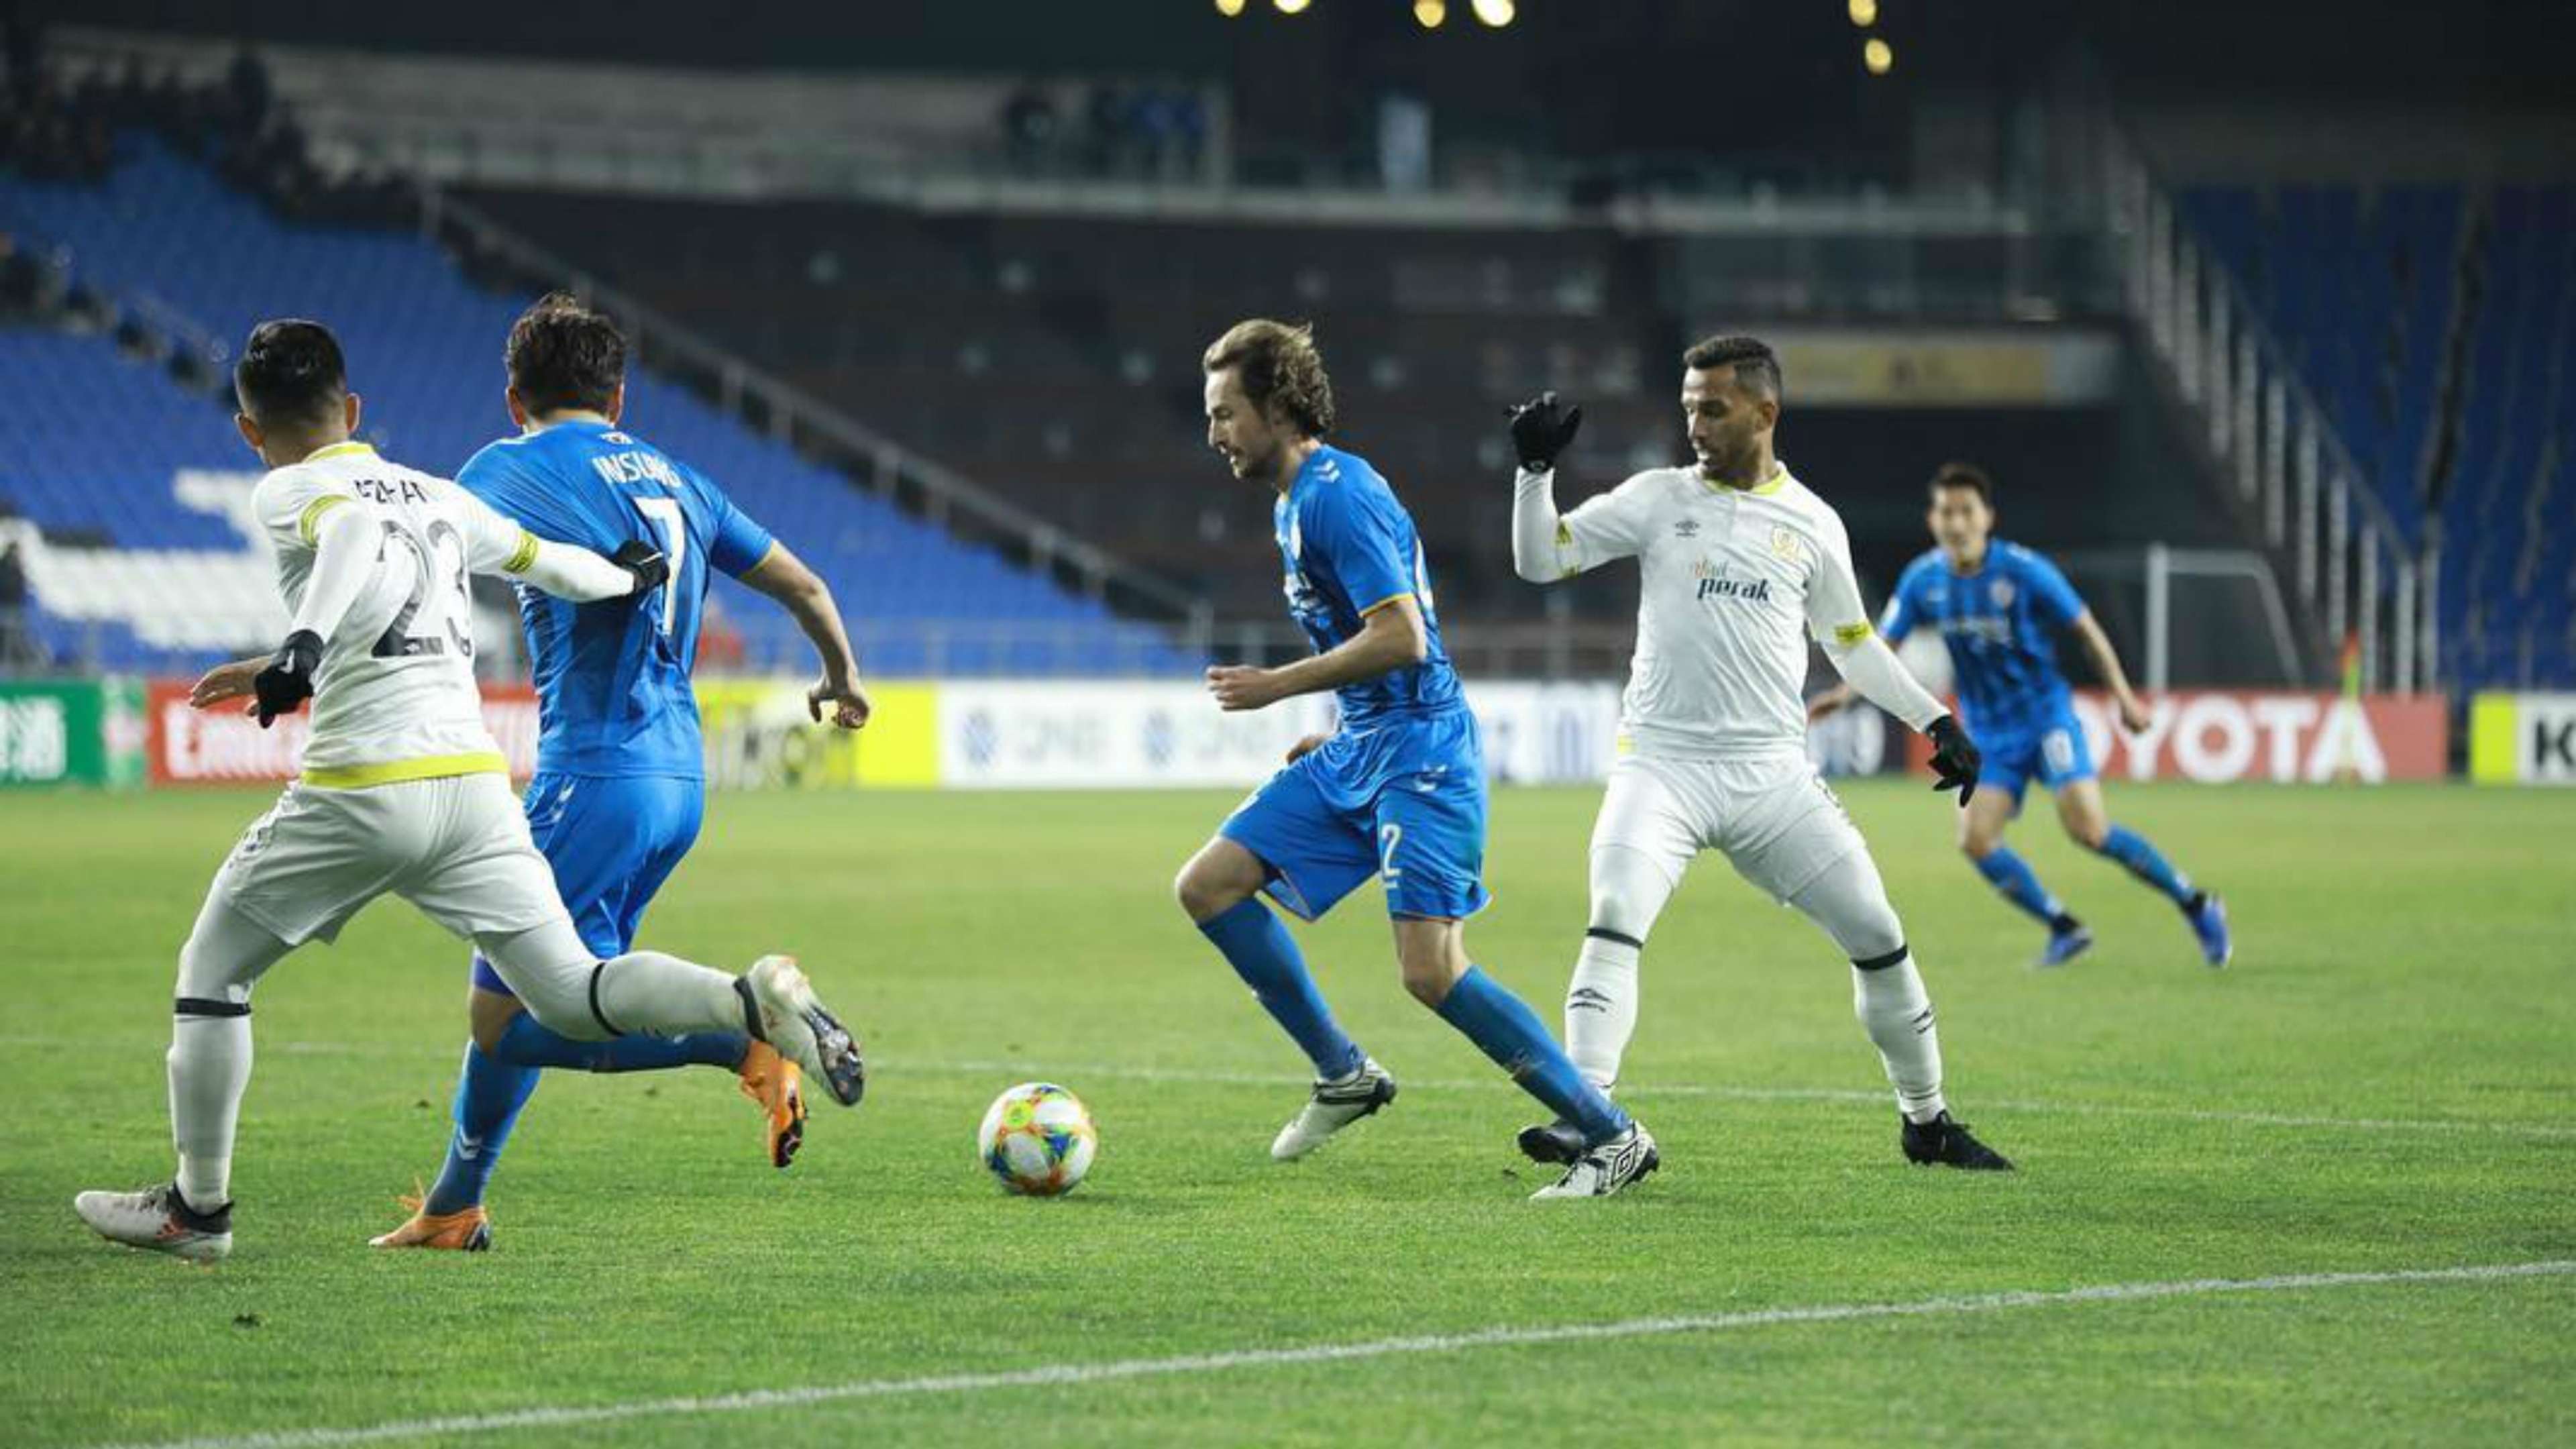 Leandro dos Santos, Ulsan v Perak, AFC Champions League, 19 Feb 2019